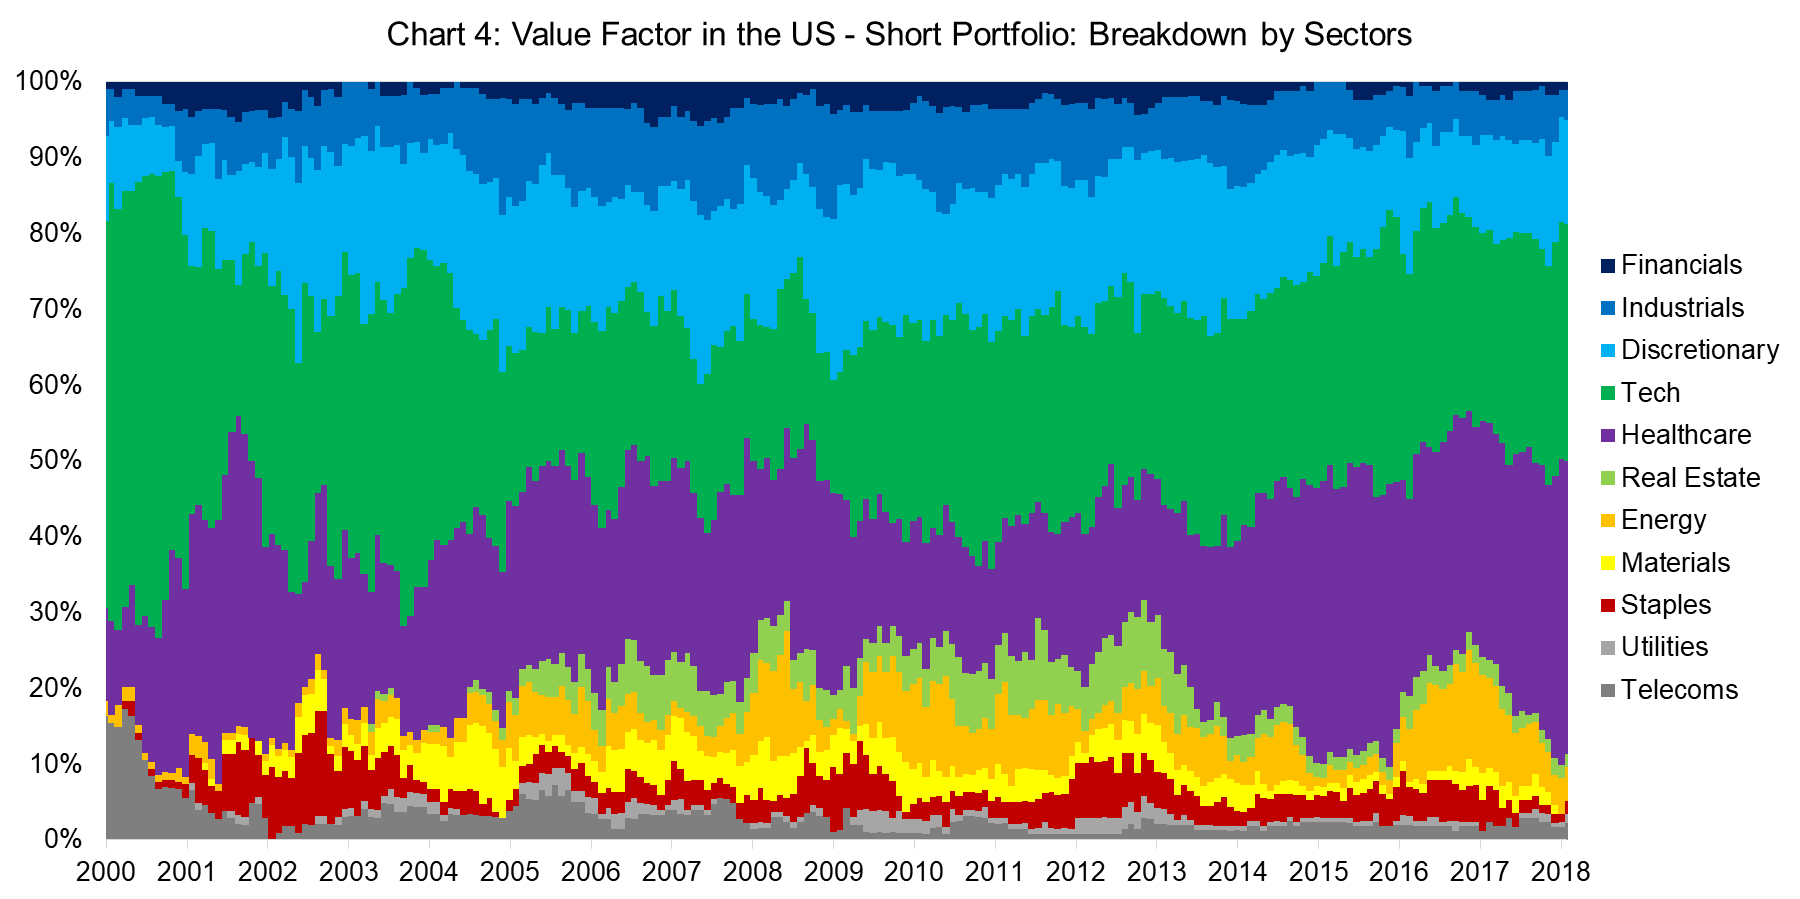 Value Factor in the US - Short Portfolio Breakdown by Sectors